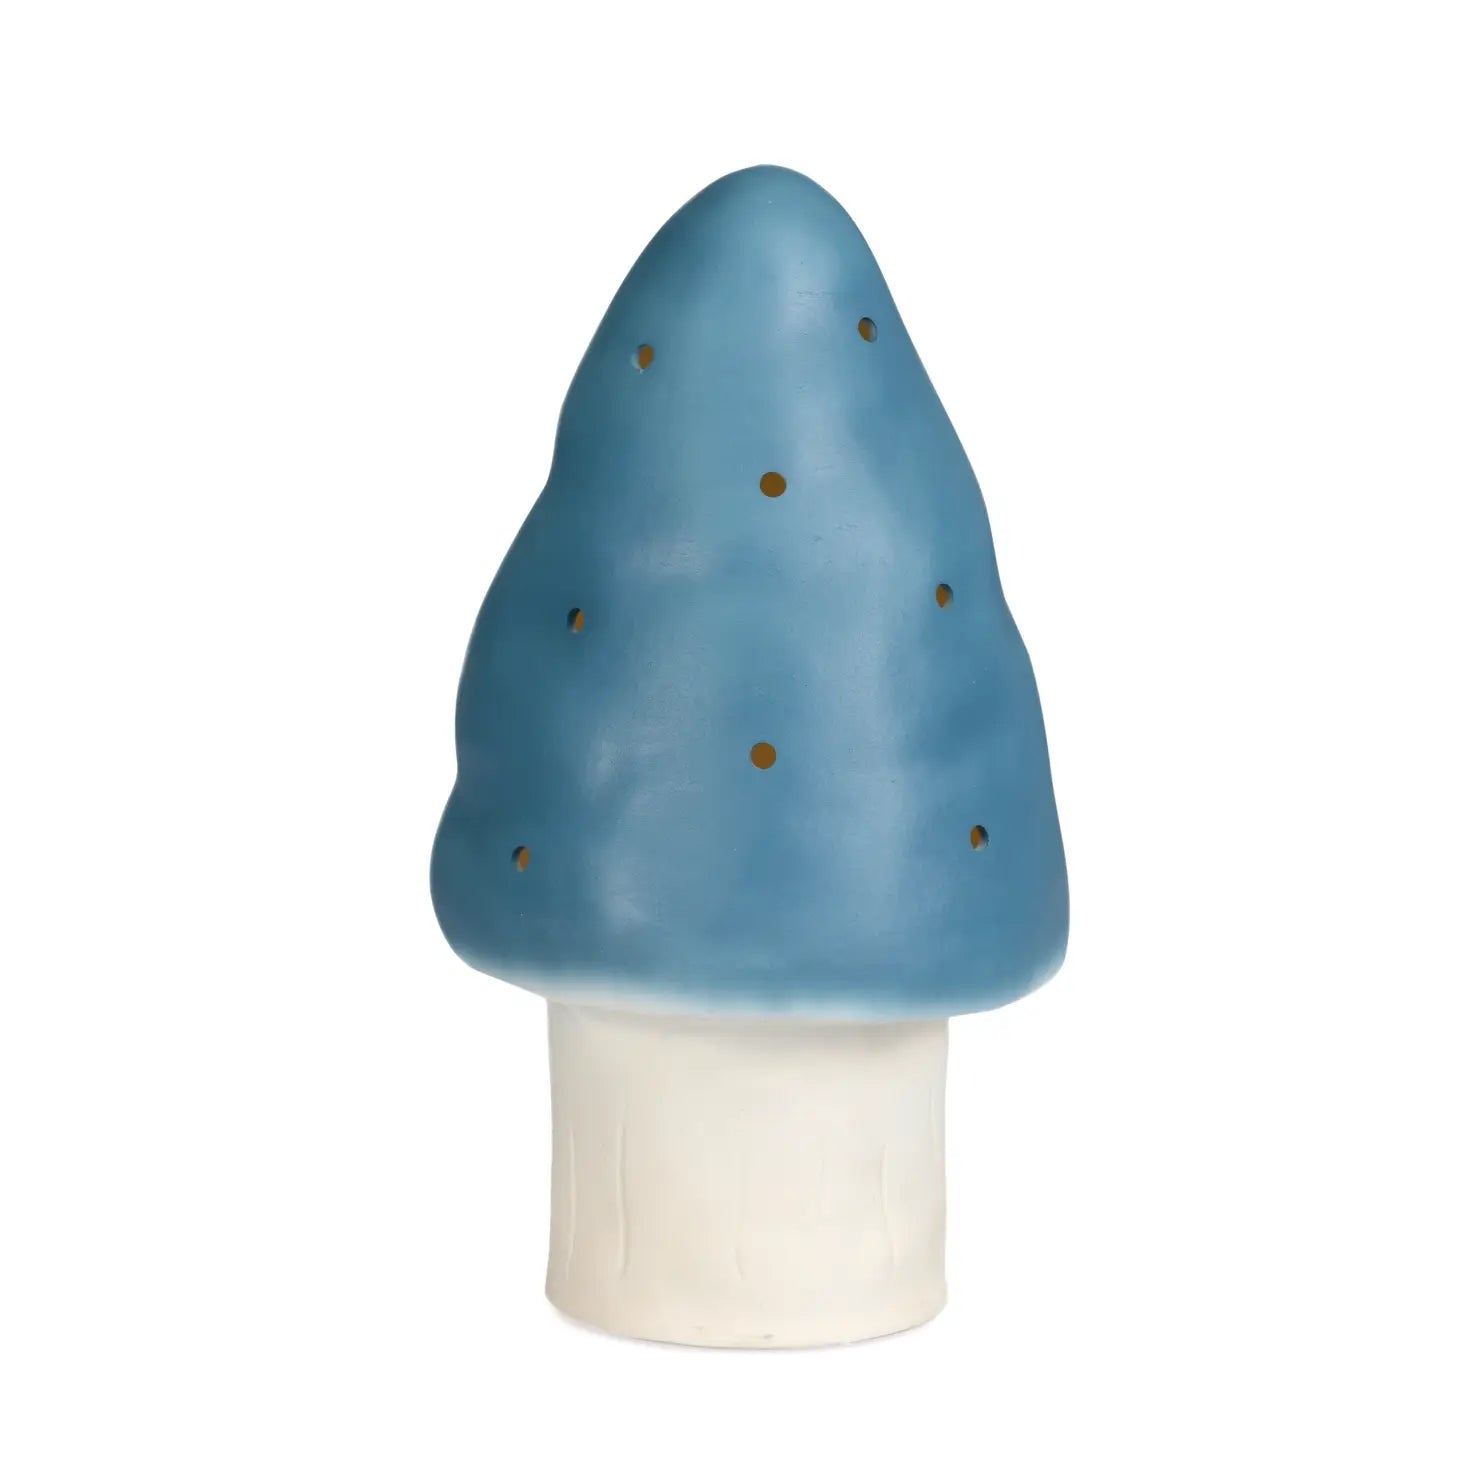 Small Pointy Mushroom Lamps